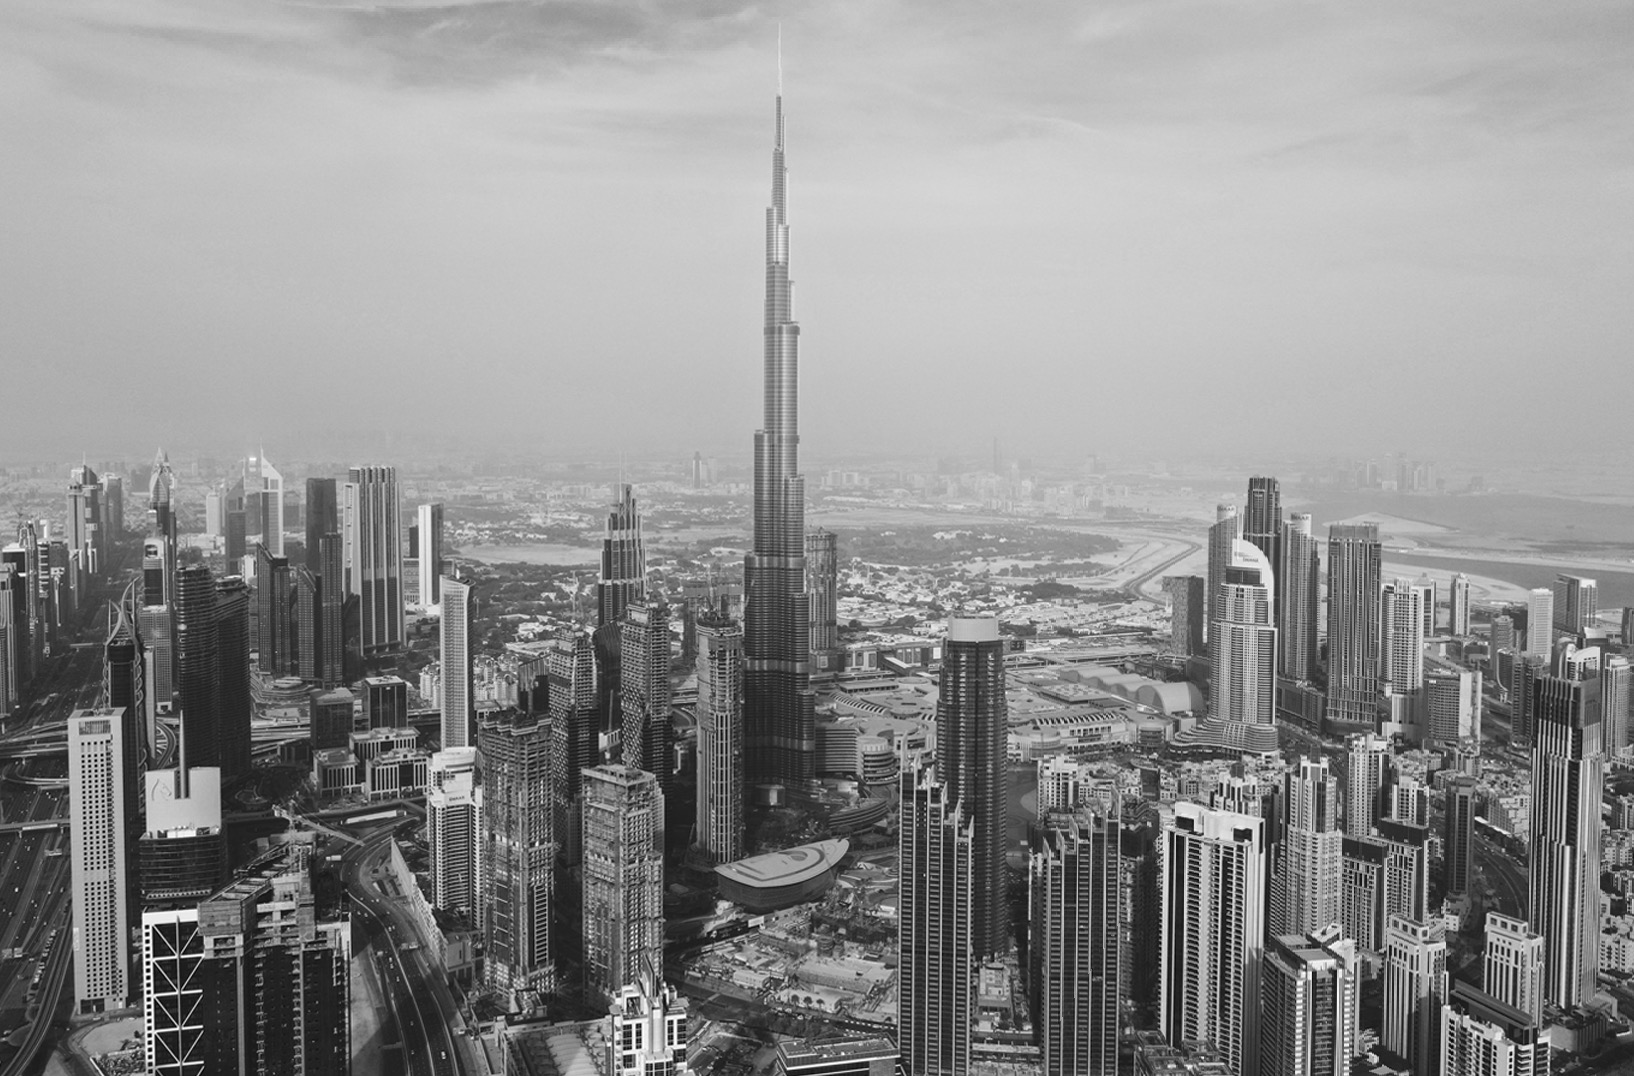 City image of Dubai with Burj Khalifa